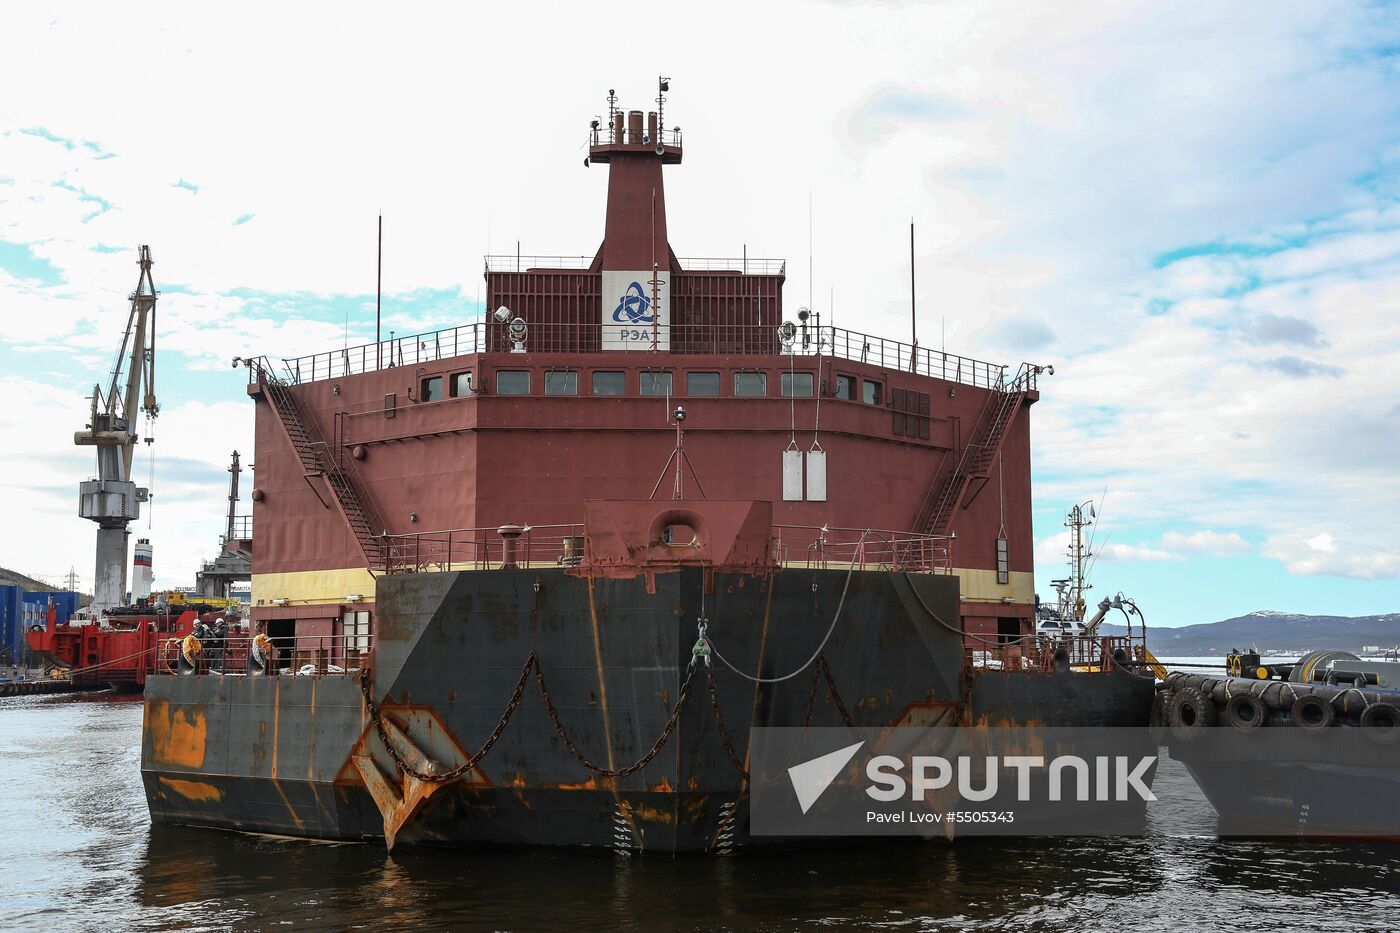 Akademik Lomonosov floating nuclear power plant welcomed in Murmansk